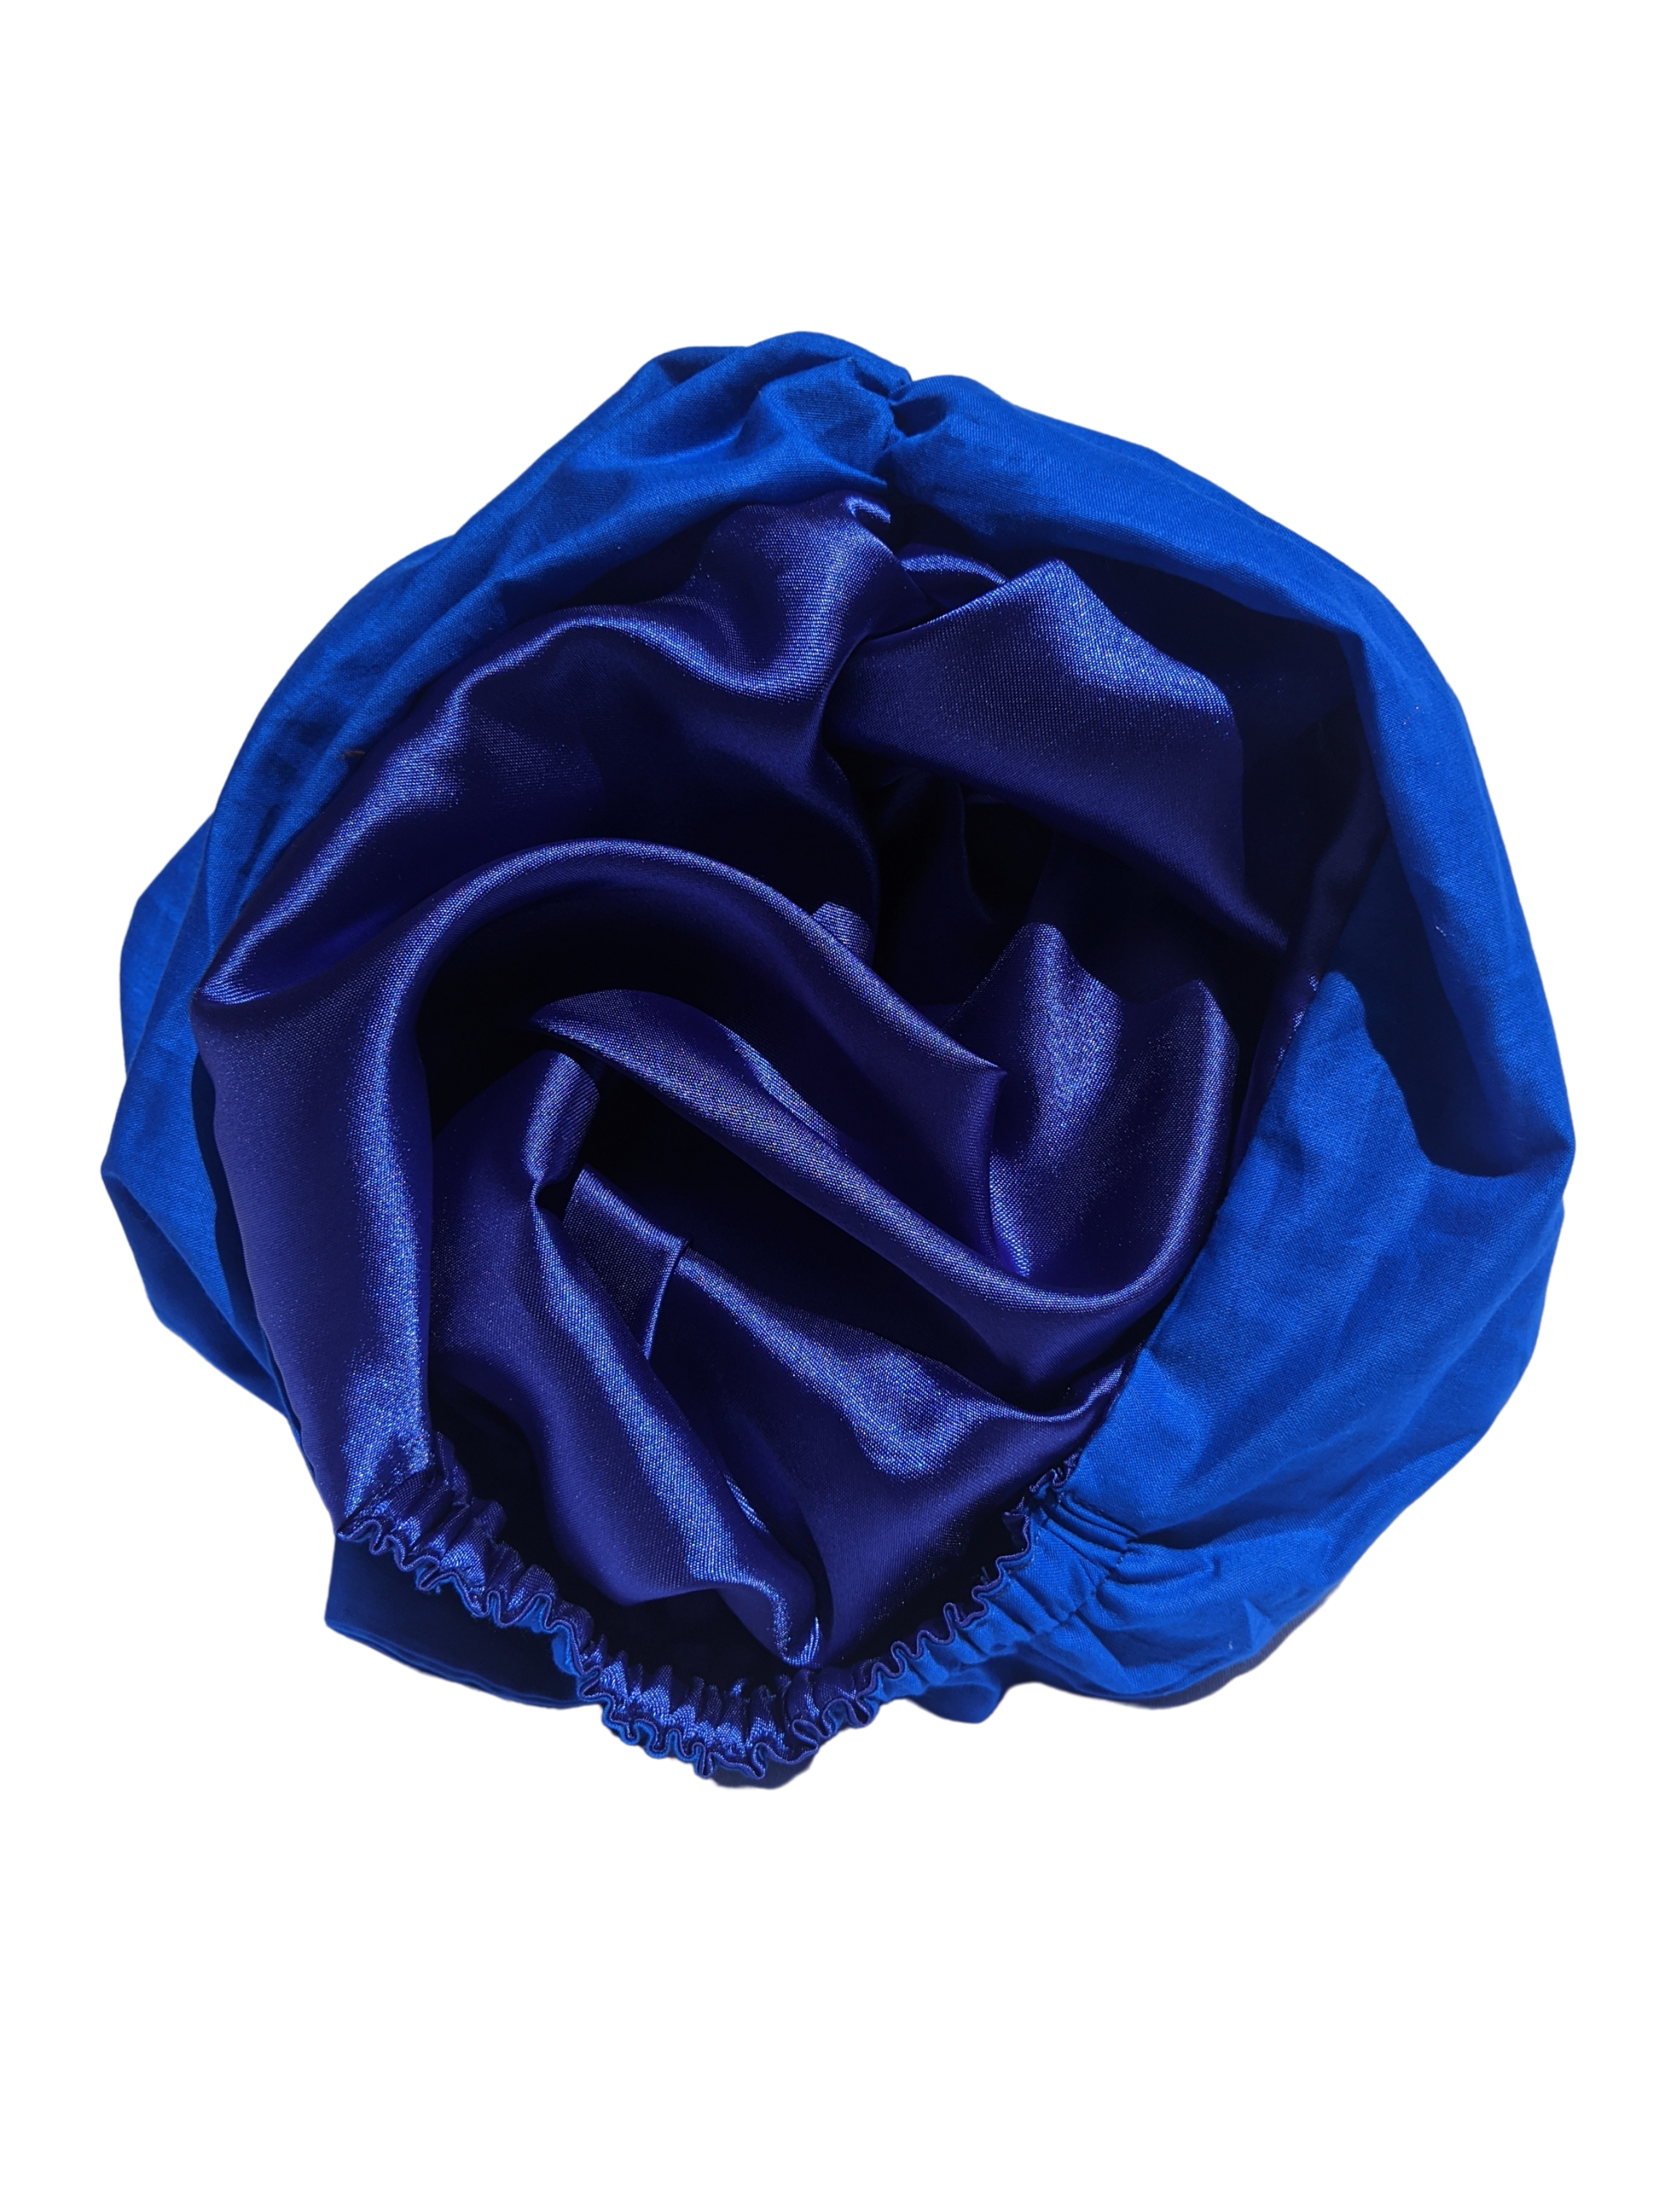 Electric Blue Cotton Turban - SOL-05